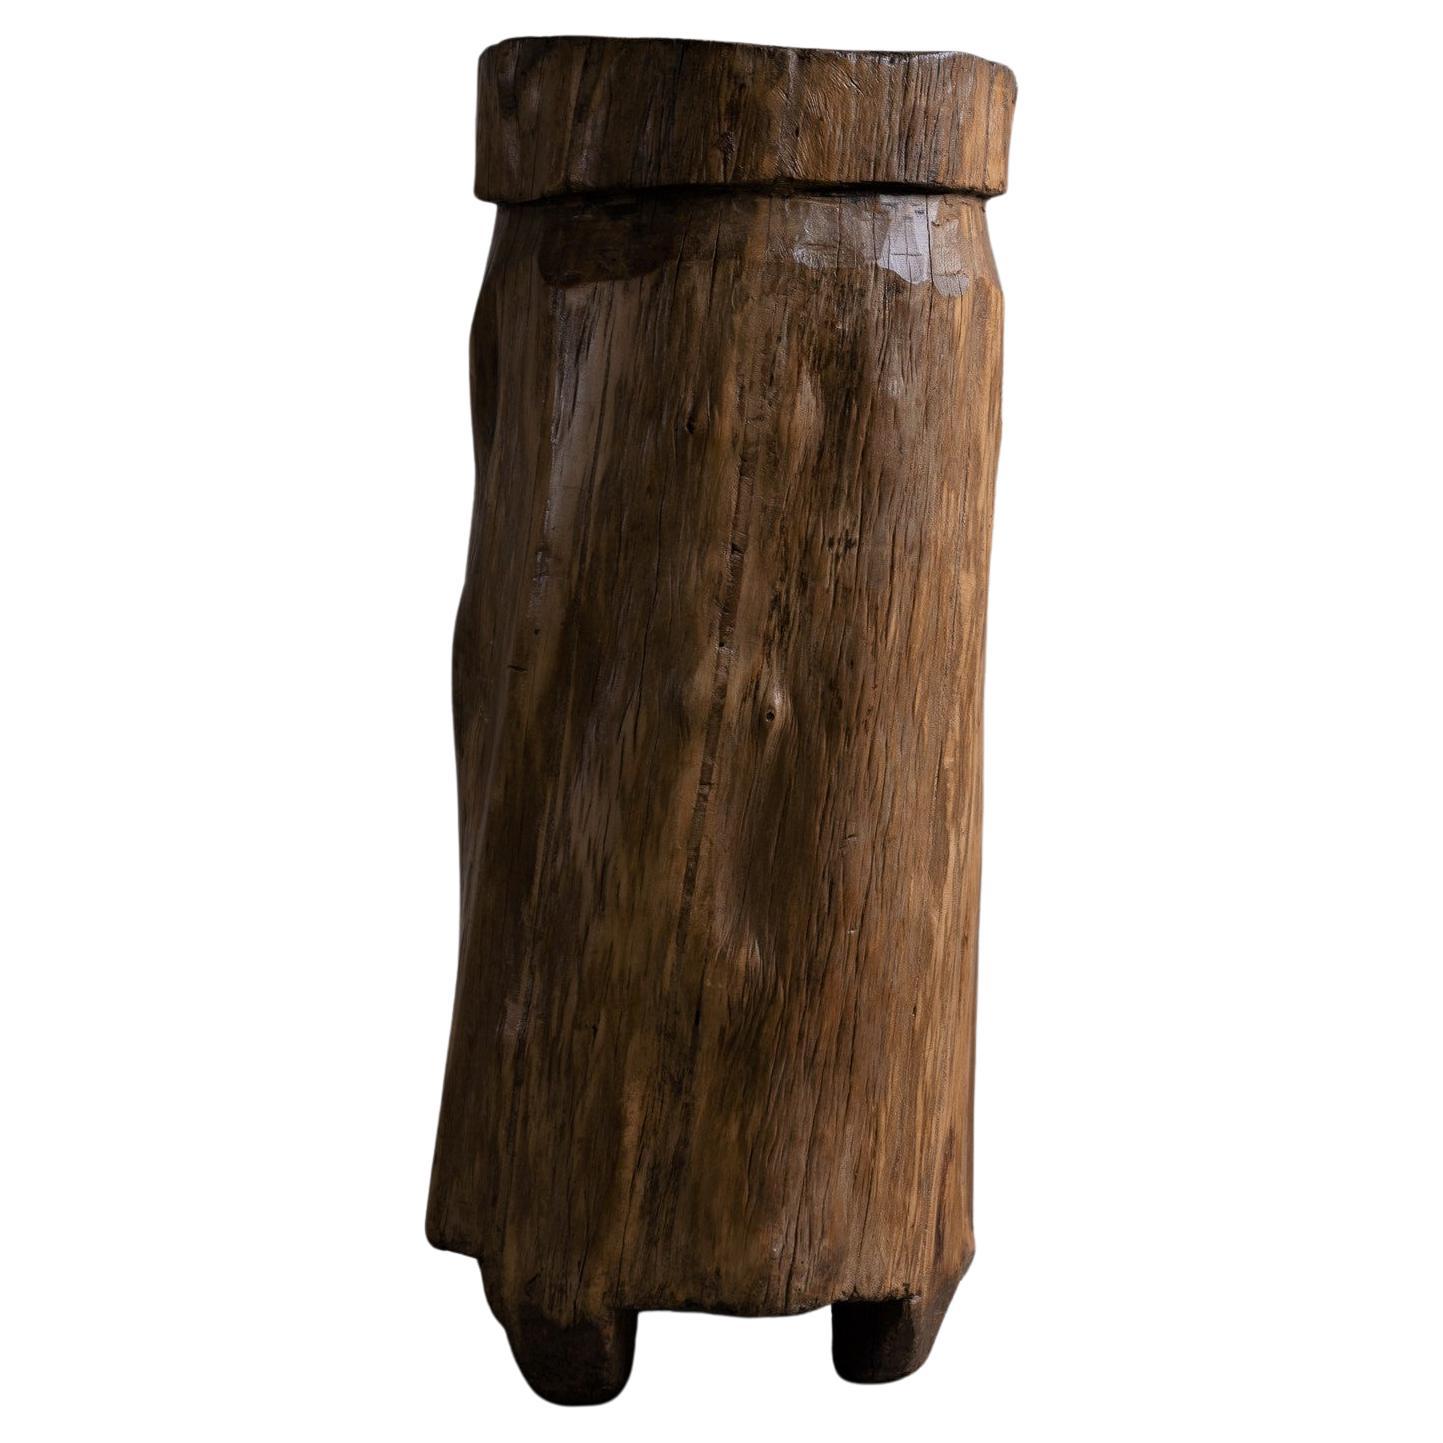 Primitive Organic Wooden Naga Pot in Teak, Wabi Sabi Style, 20th Century For Sale